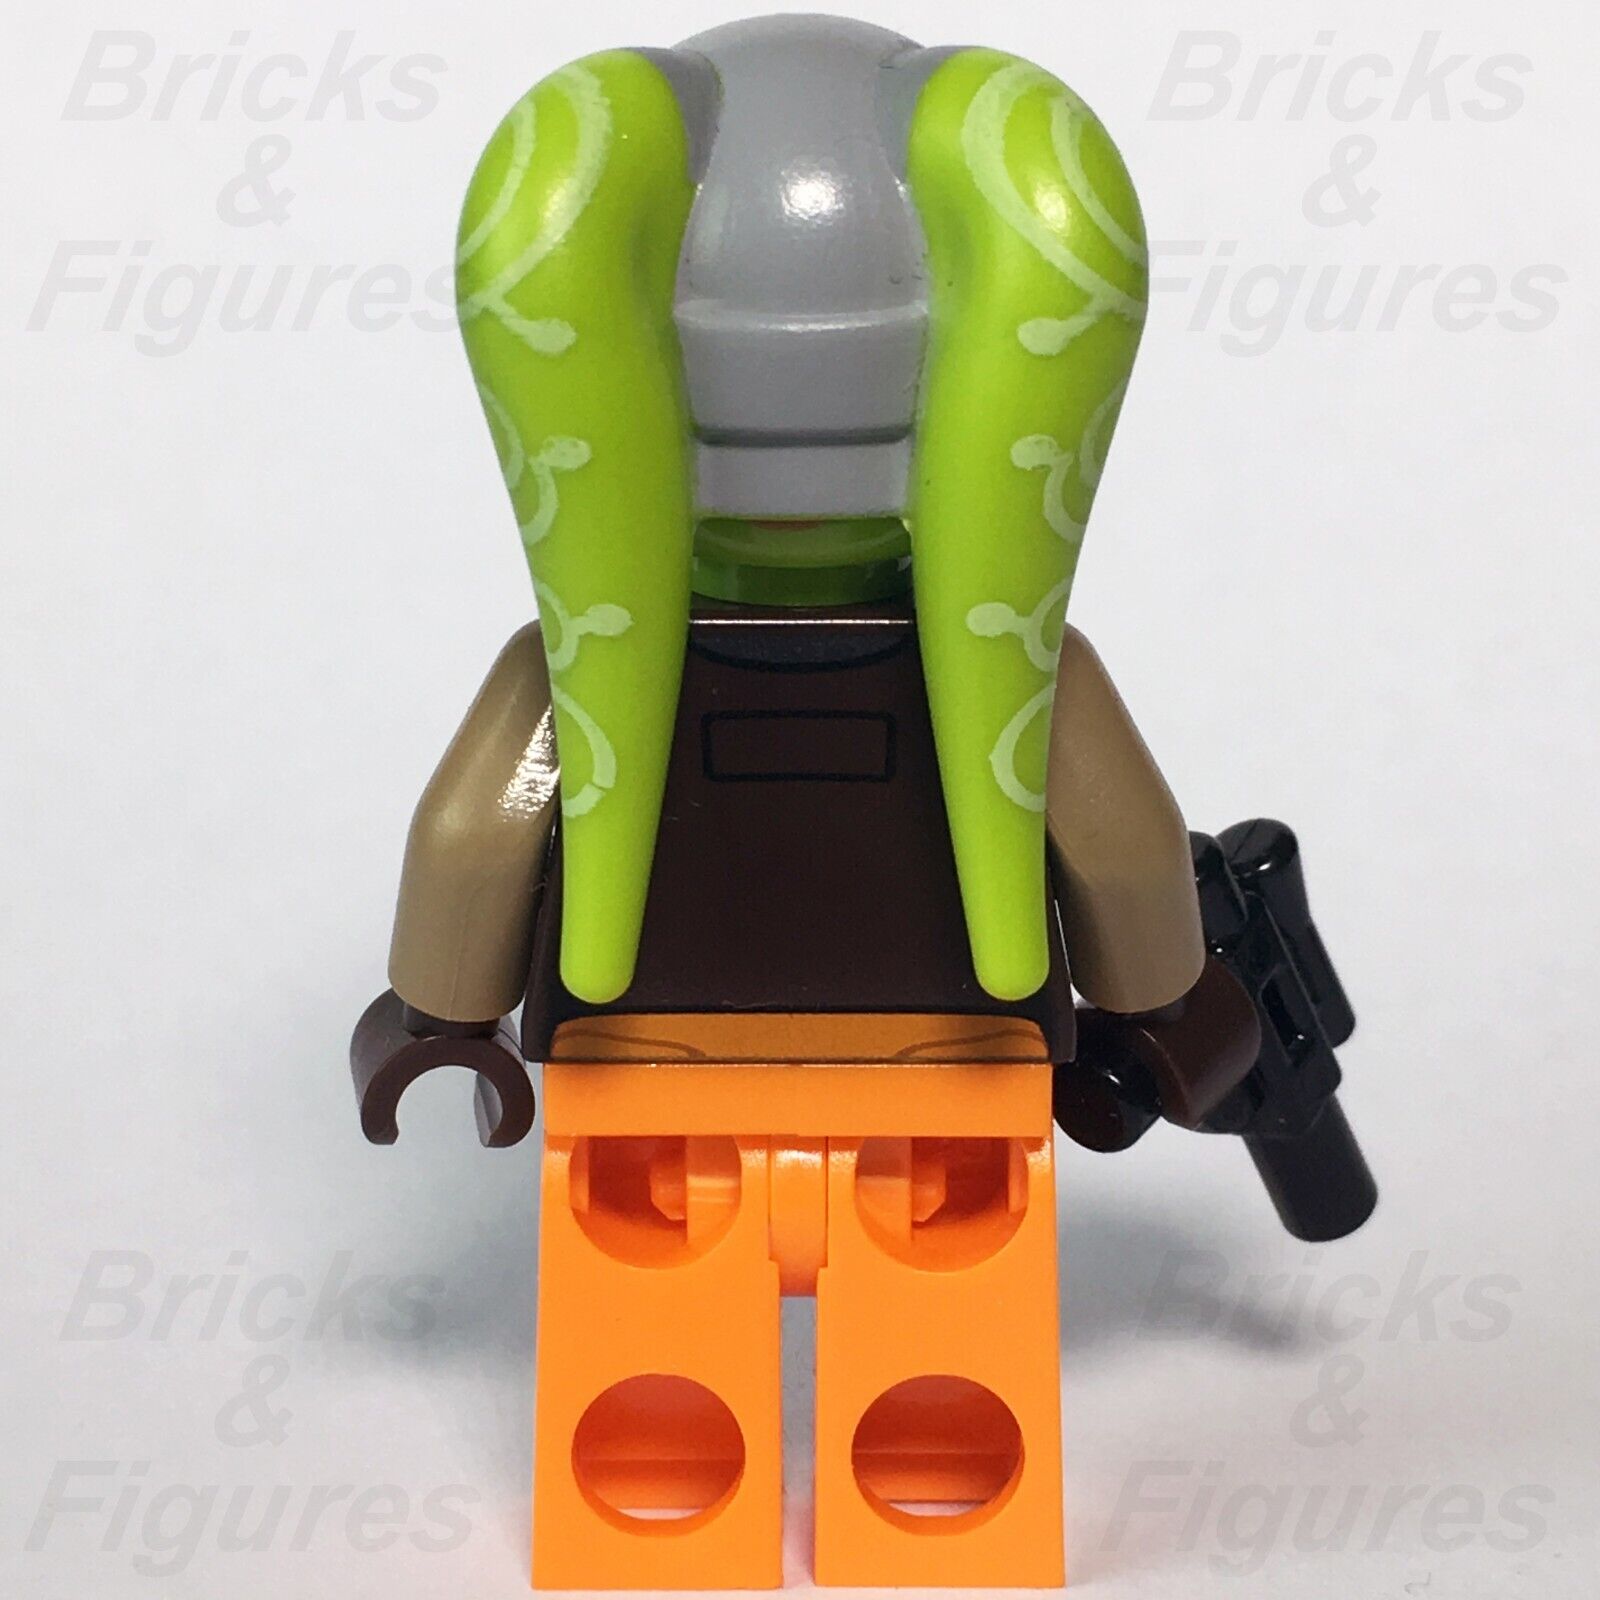 LEGO Star Wars Hera Syndulla Minifigure Rebels Twi'lek Pilot 75127 75053 sw0576